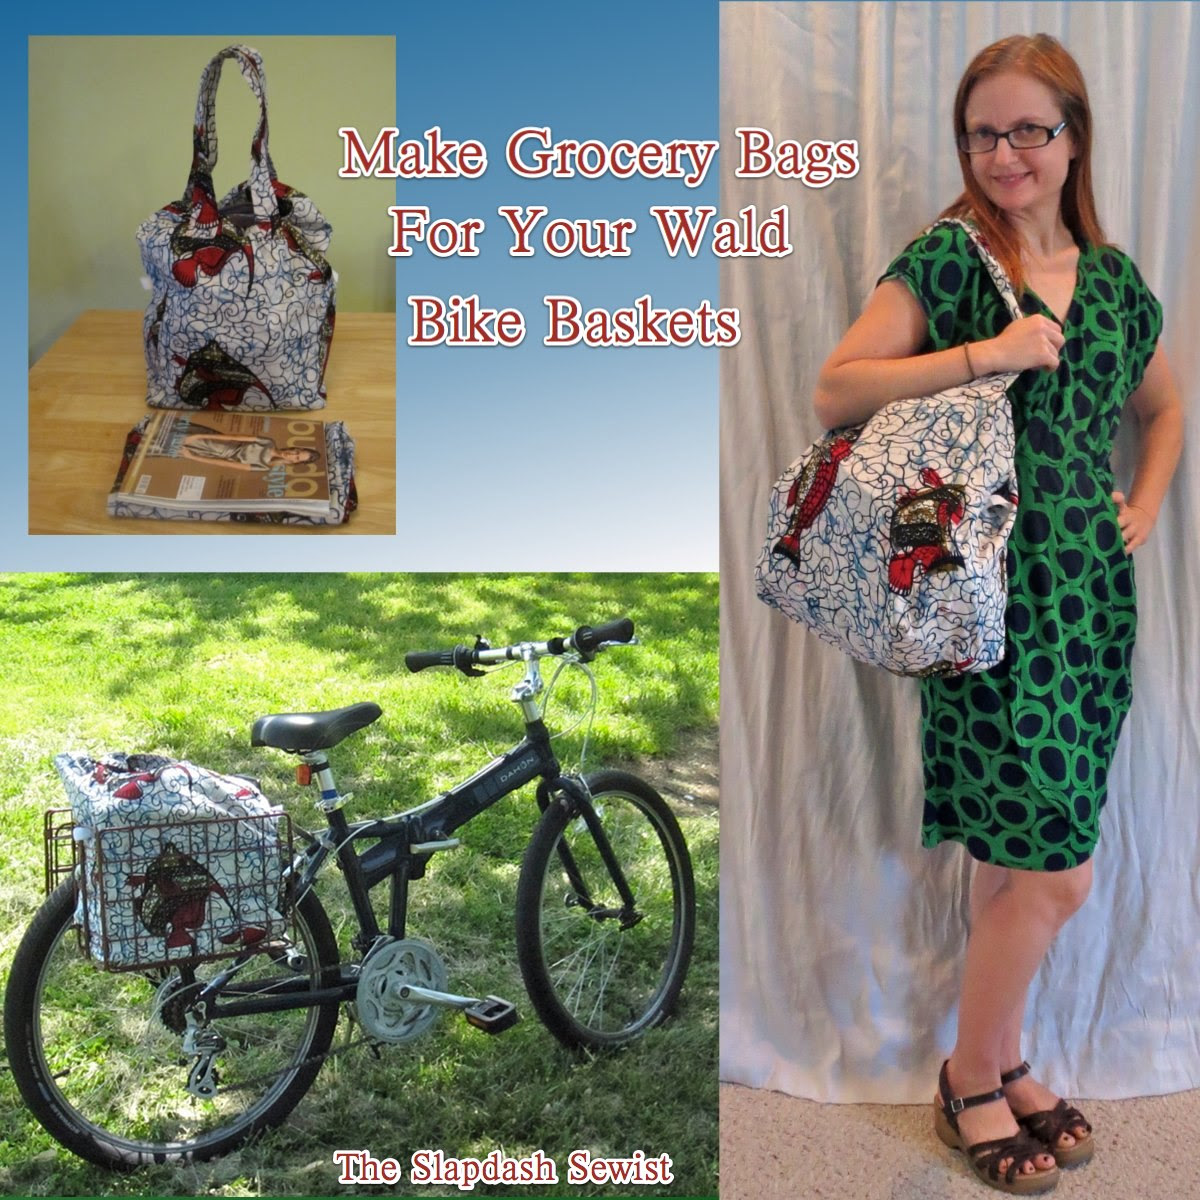 The Slapdash Sewist How To Make Basket Liner Grocery Bags For Your Wald Bike Baskets